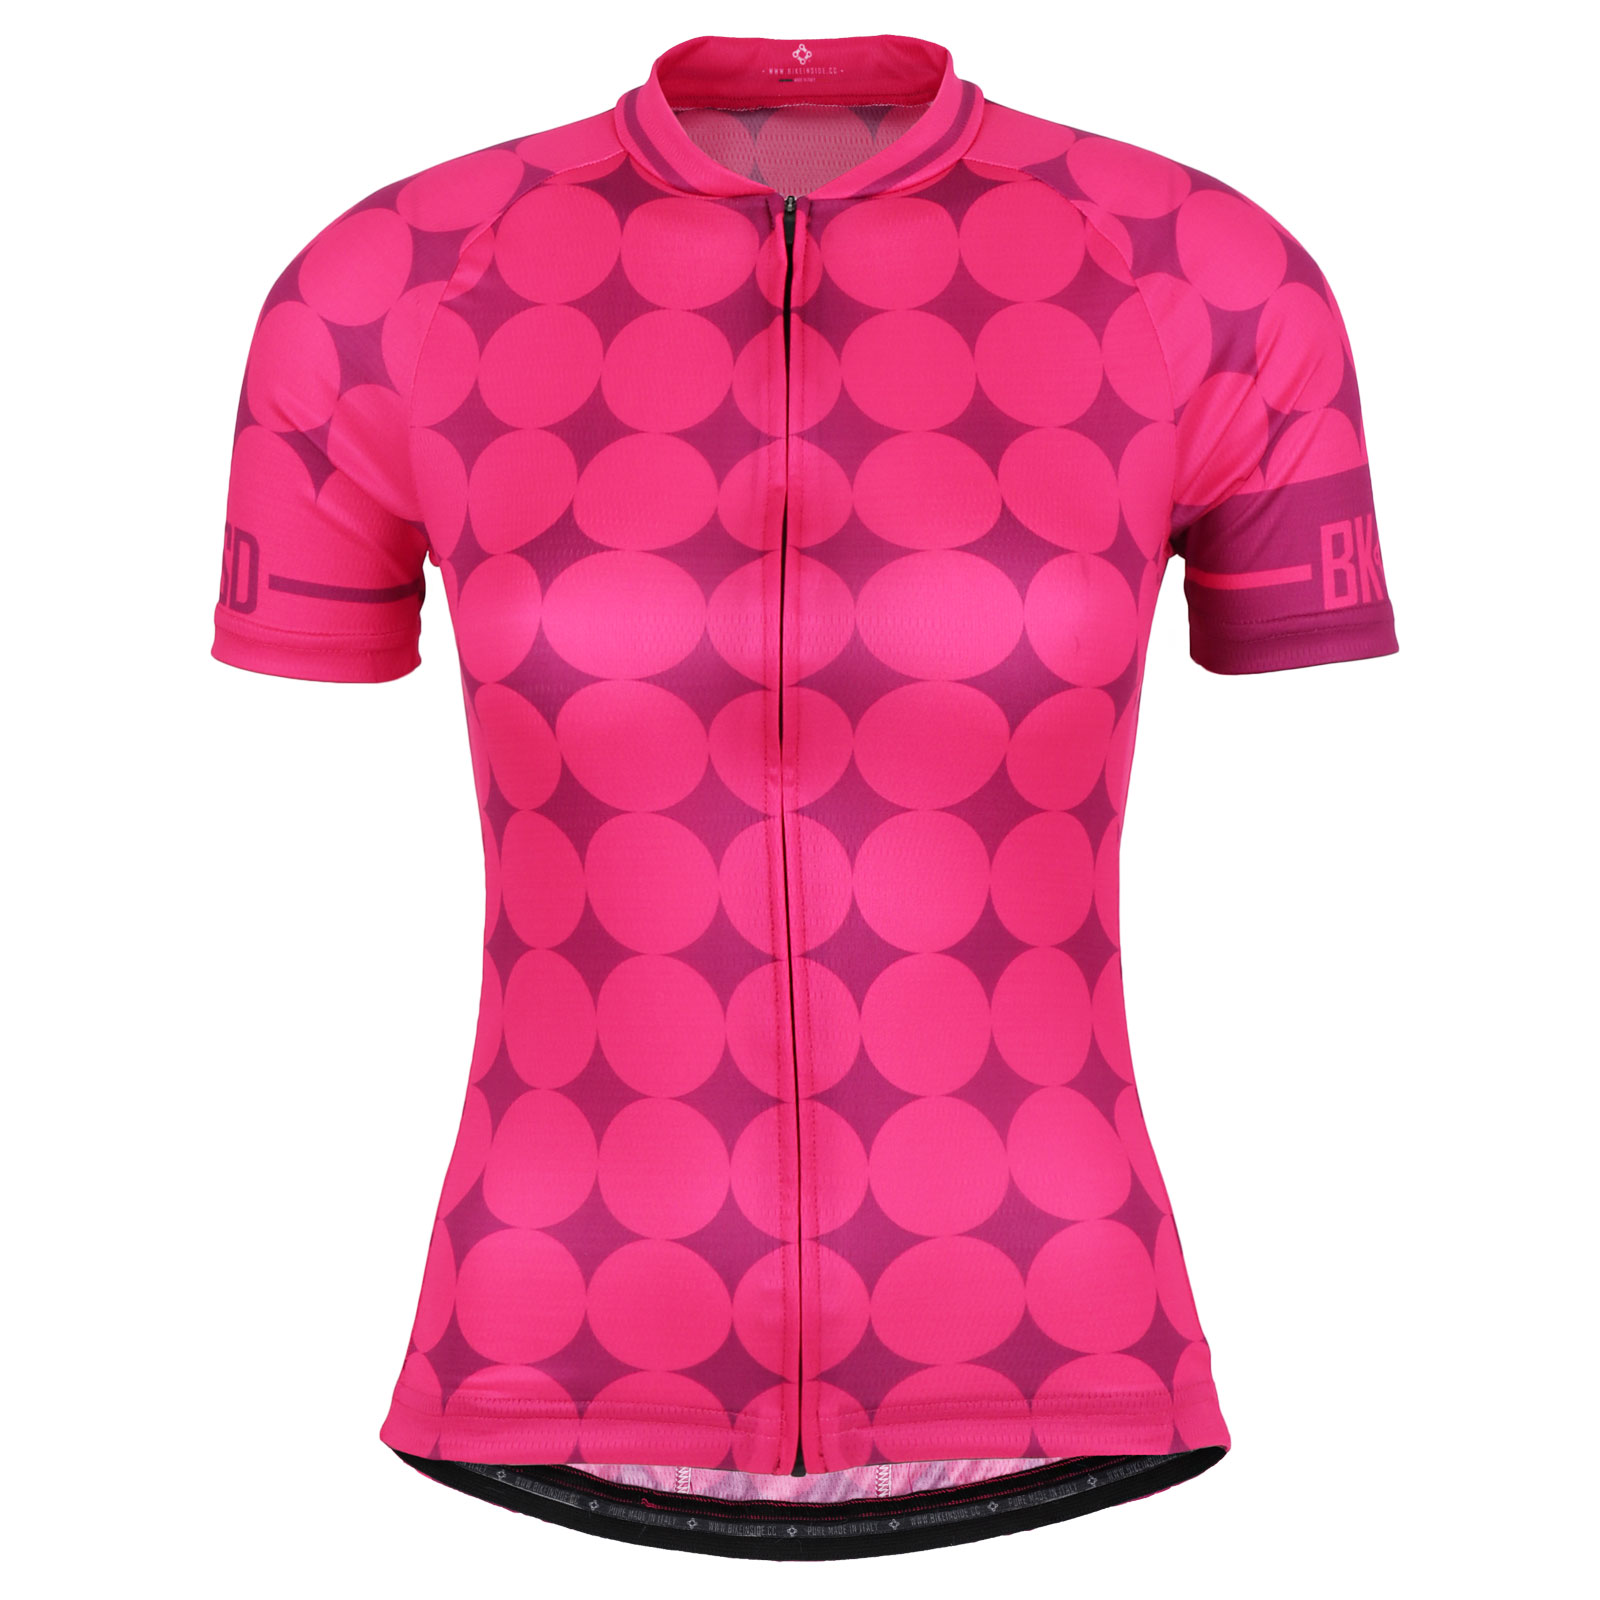 Produktbild von Bike Inside Cycling Wear Pure Style Damen Trikot - Pink Rounded